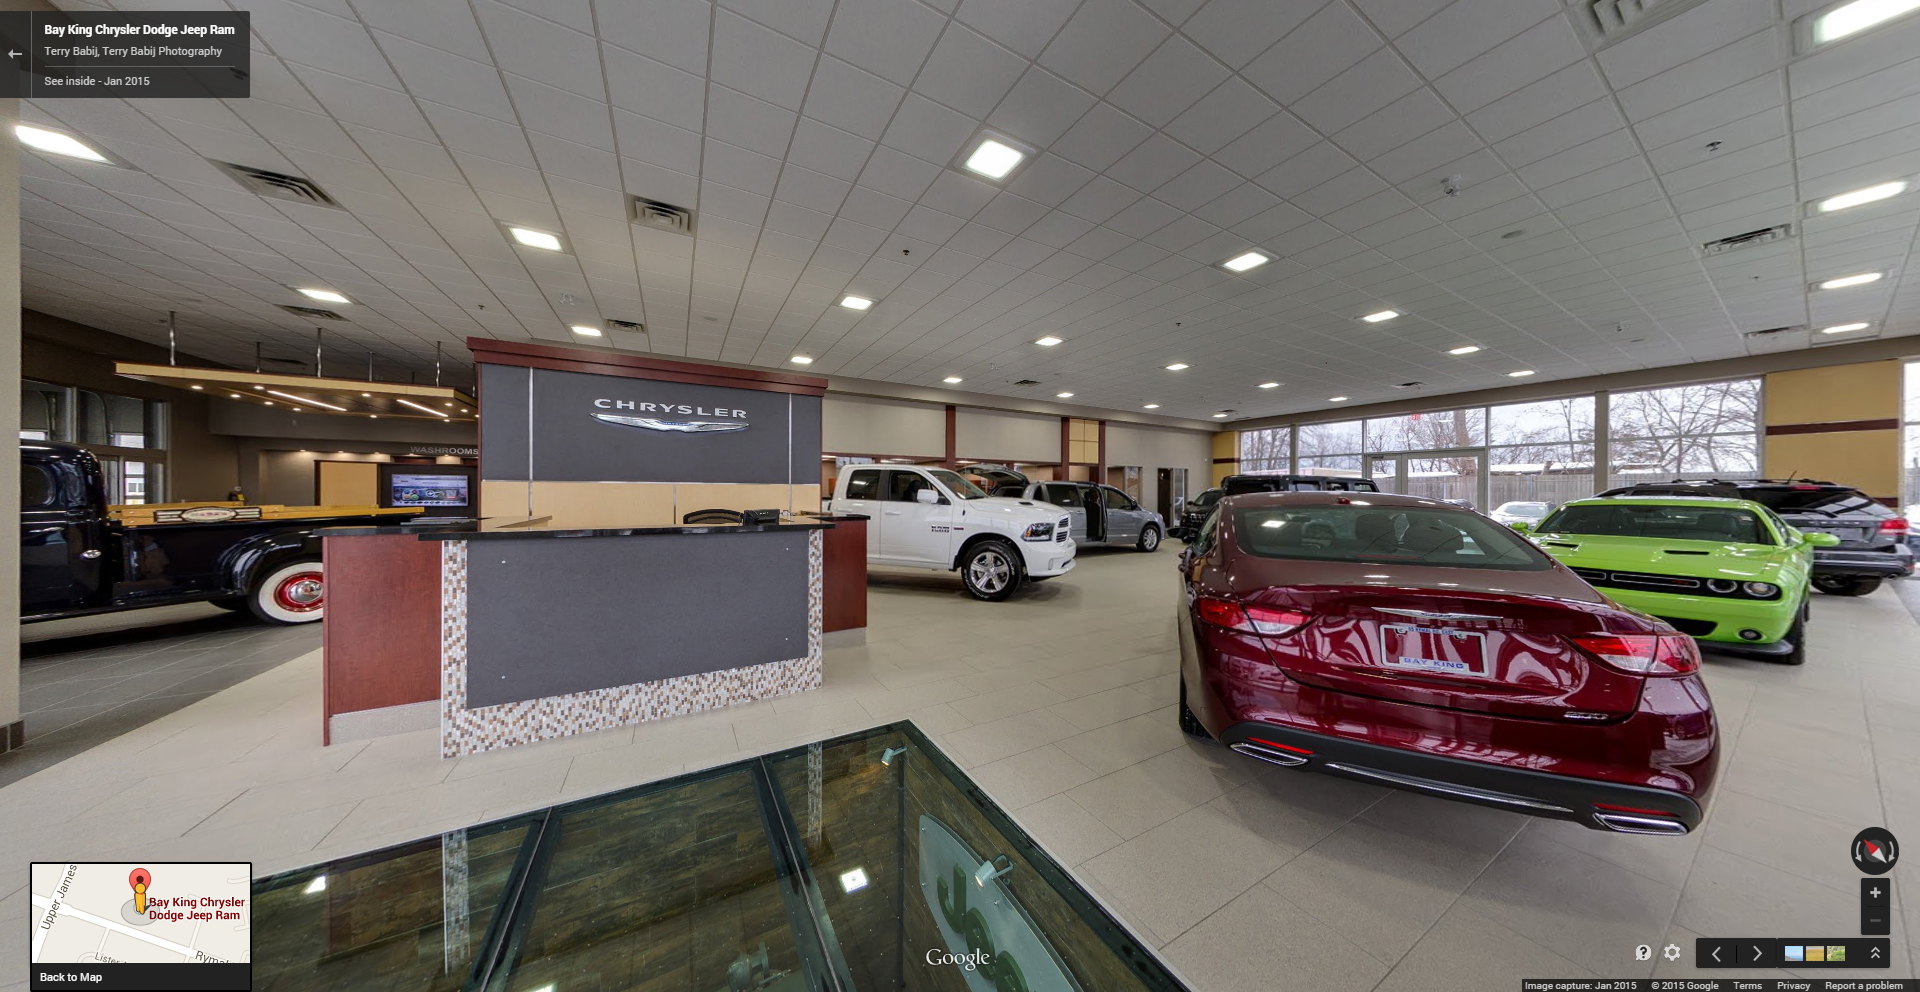 Auto Dealer, Bay King Motors, Google Maps Business View